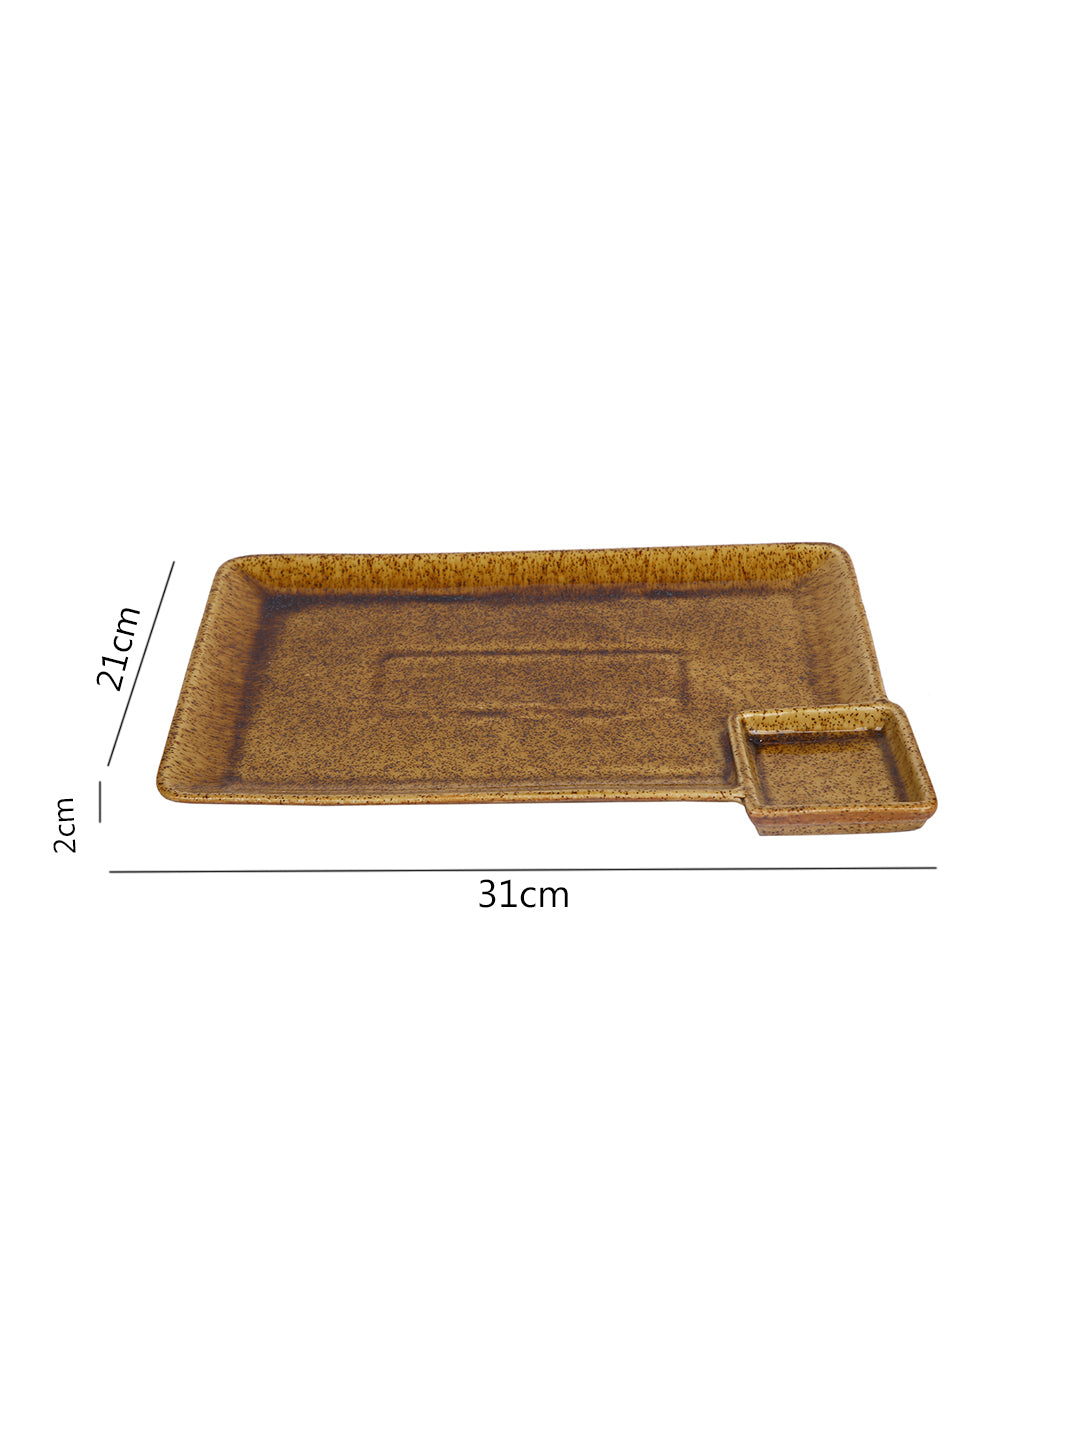 Glazed Ceramic Rectangular Platter in Natural Brown